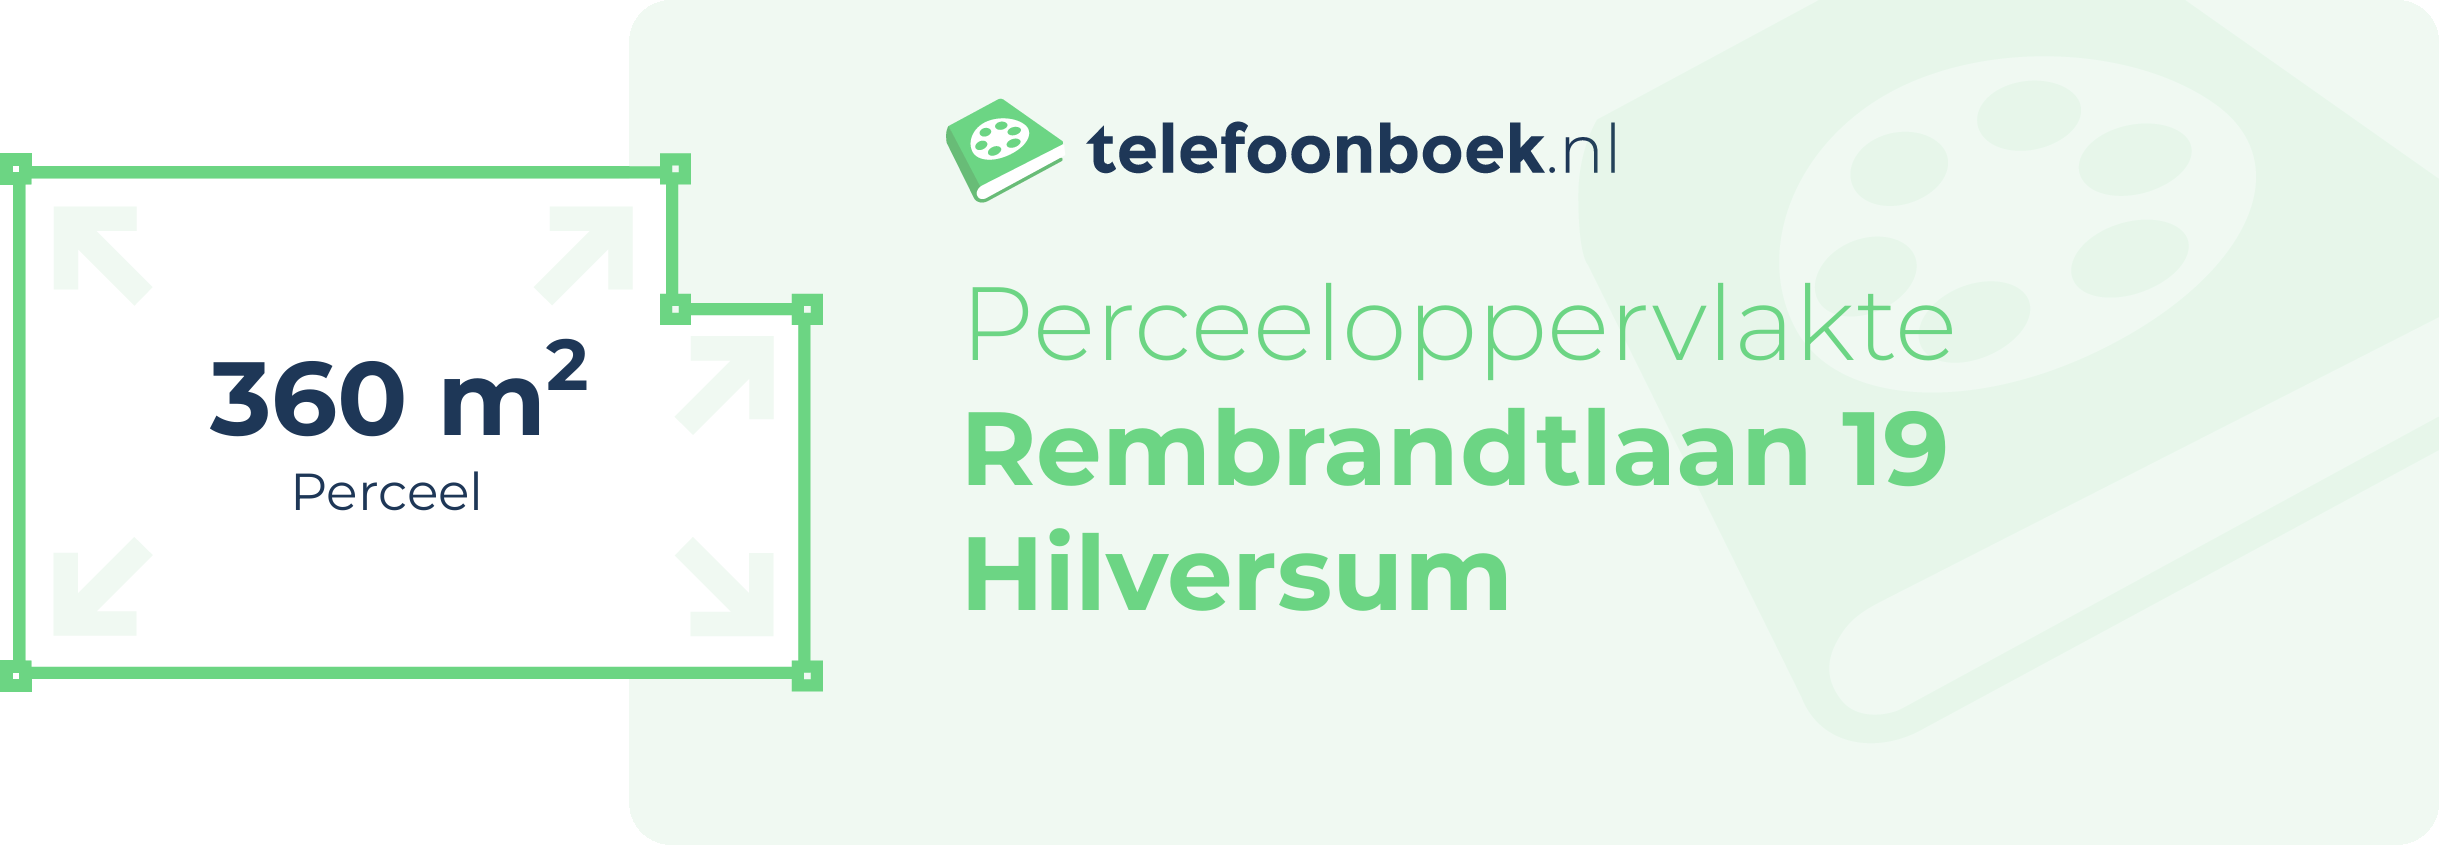 Perceeloppervlakte Rembrandtlaan 19 Hilversum